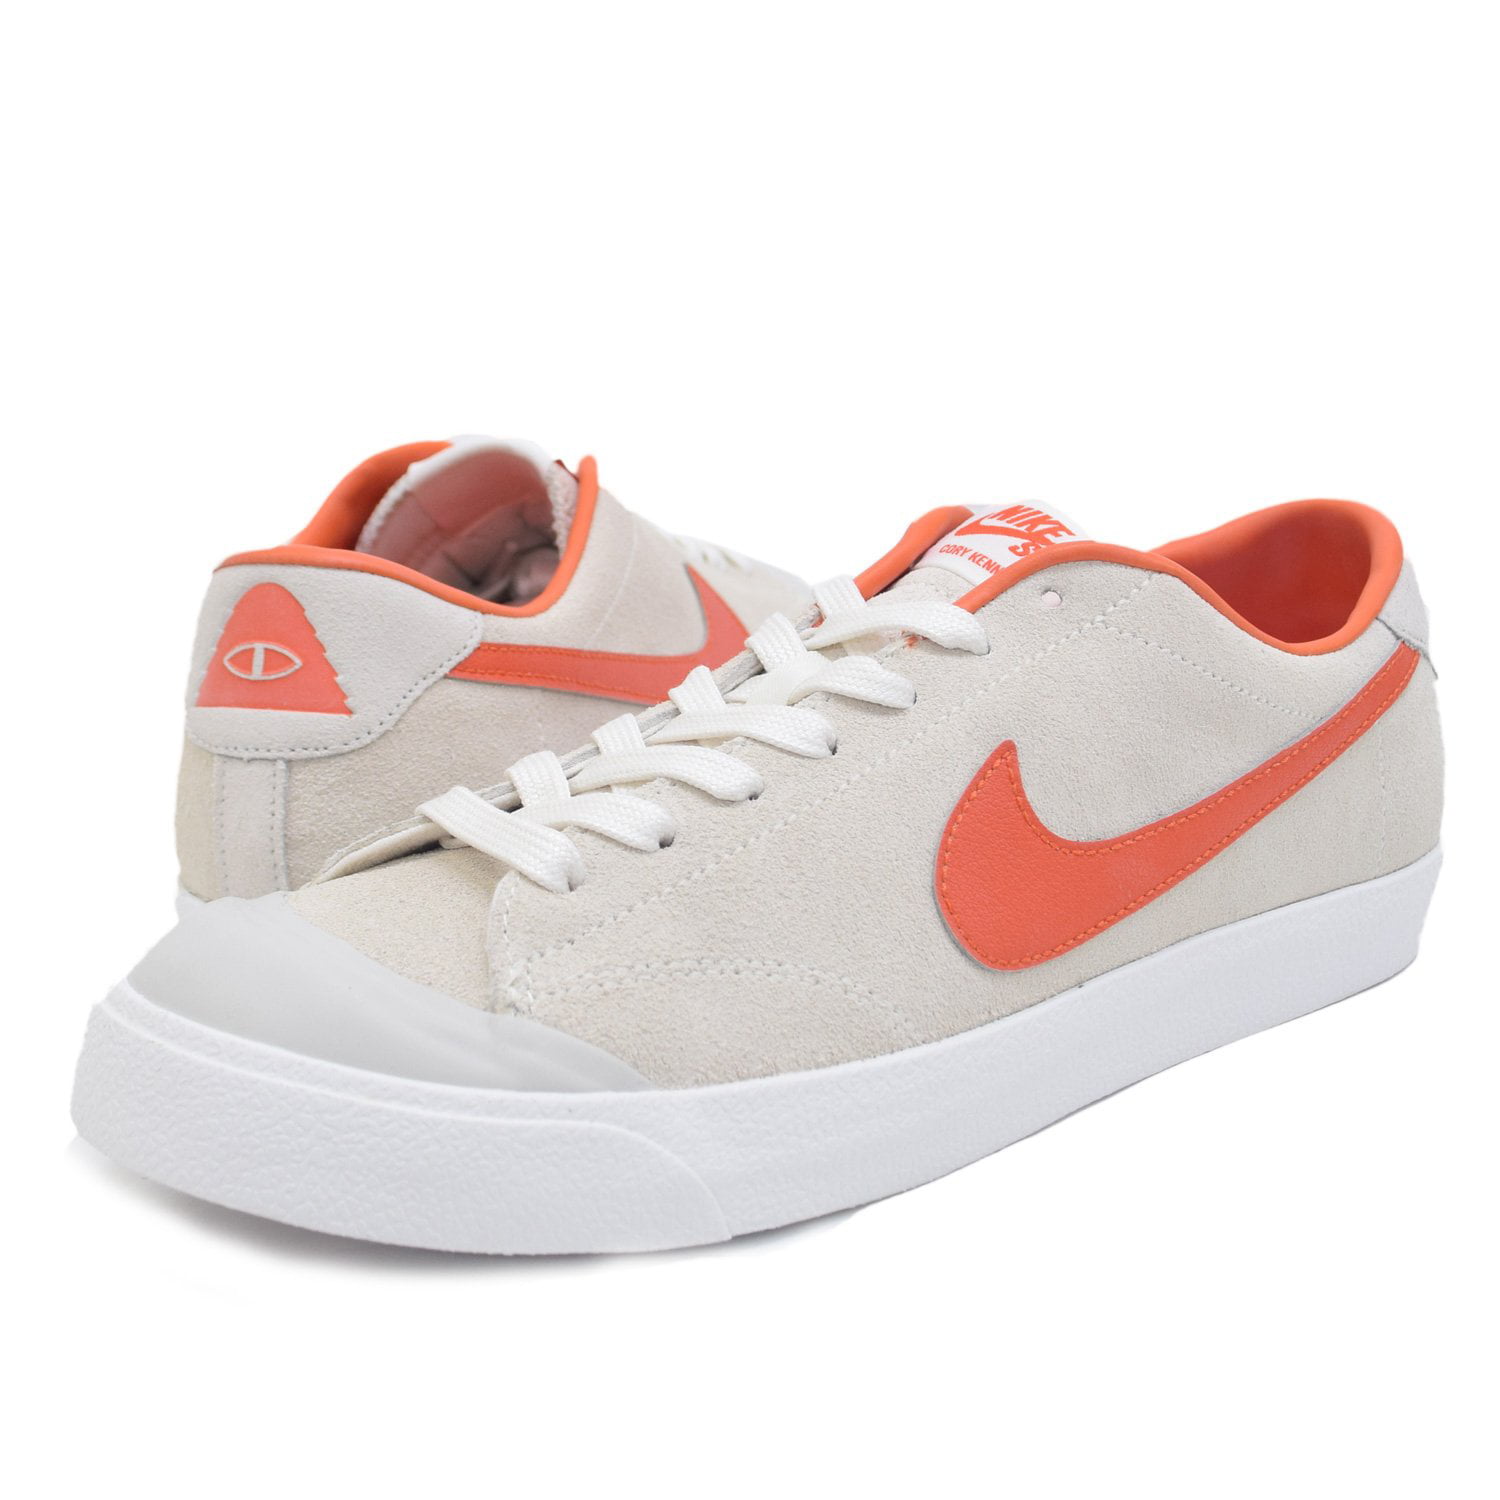 Nike SB Air Zoom All Court CK Orange-Light Bone) Men's Shoes - Walmart.com